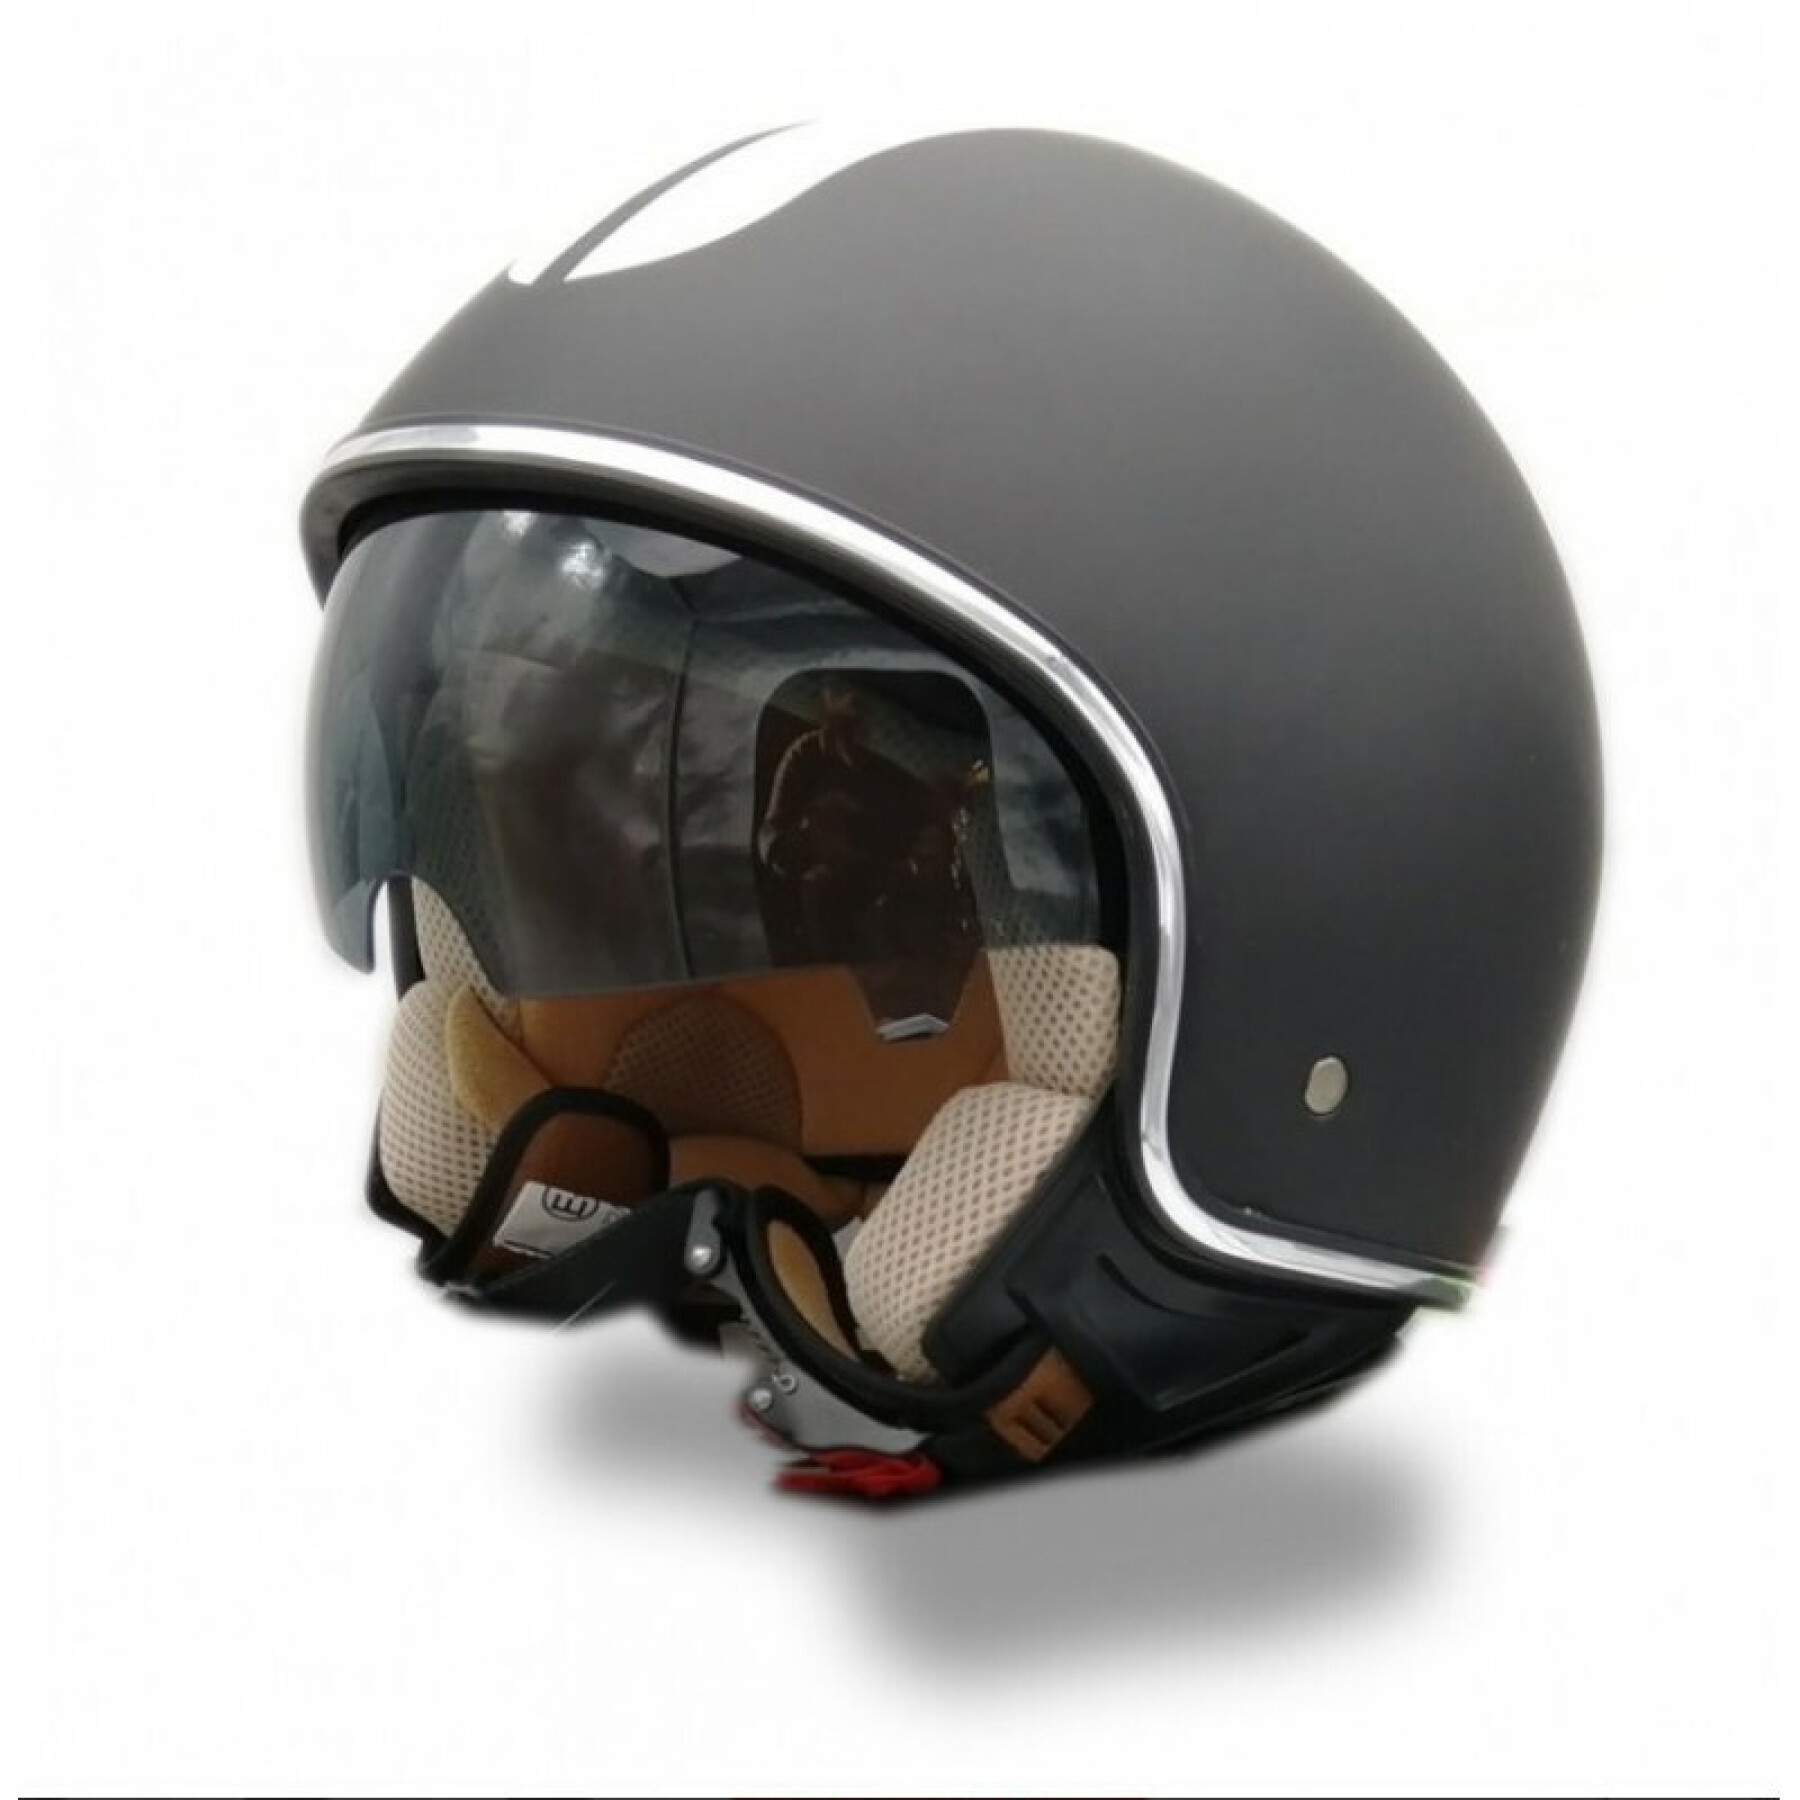 Casco da moto jet Vito Helmets special